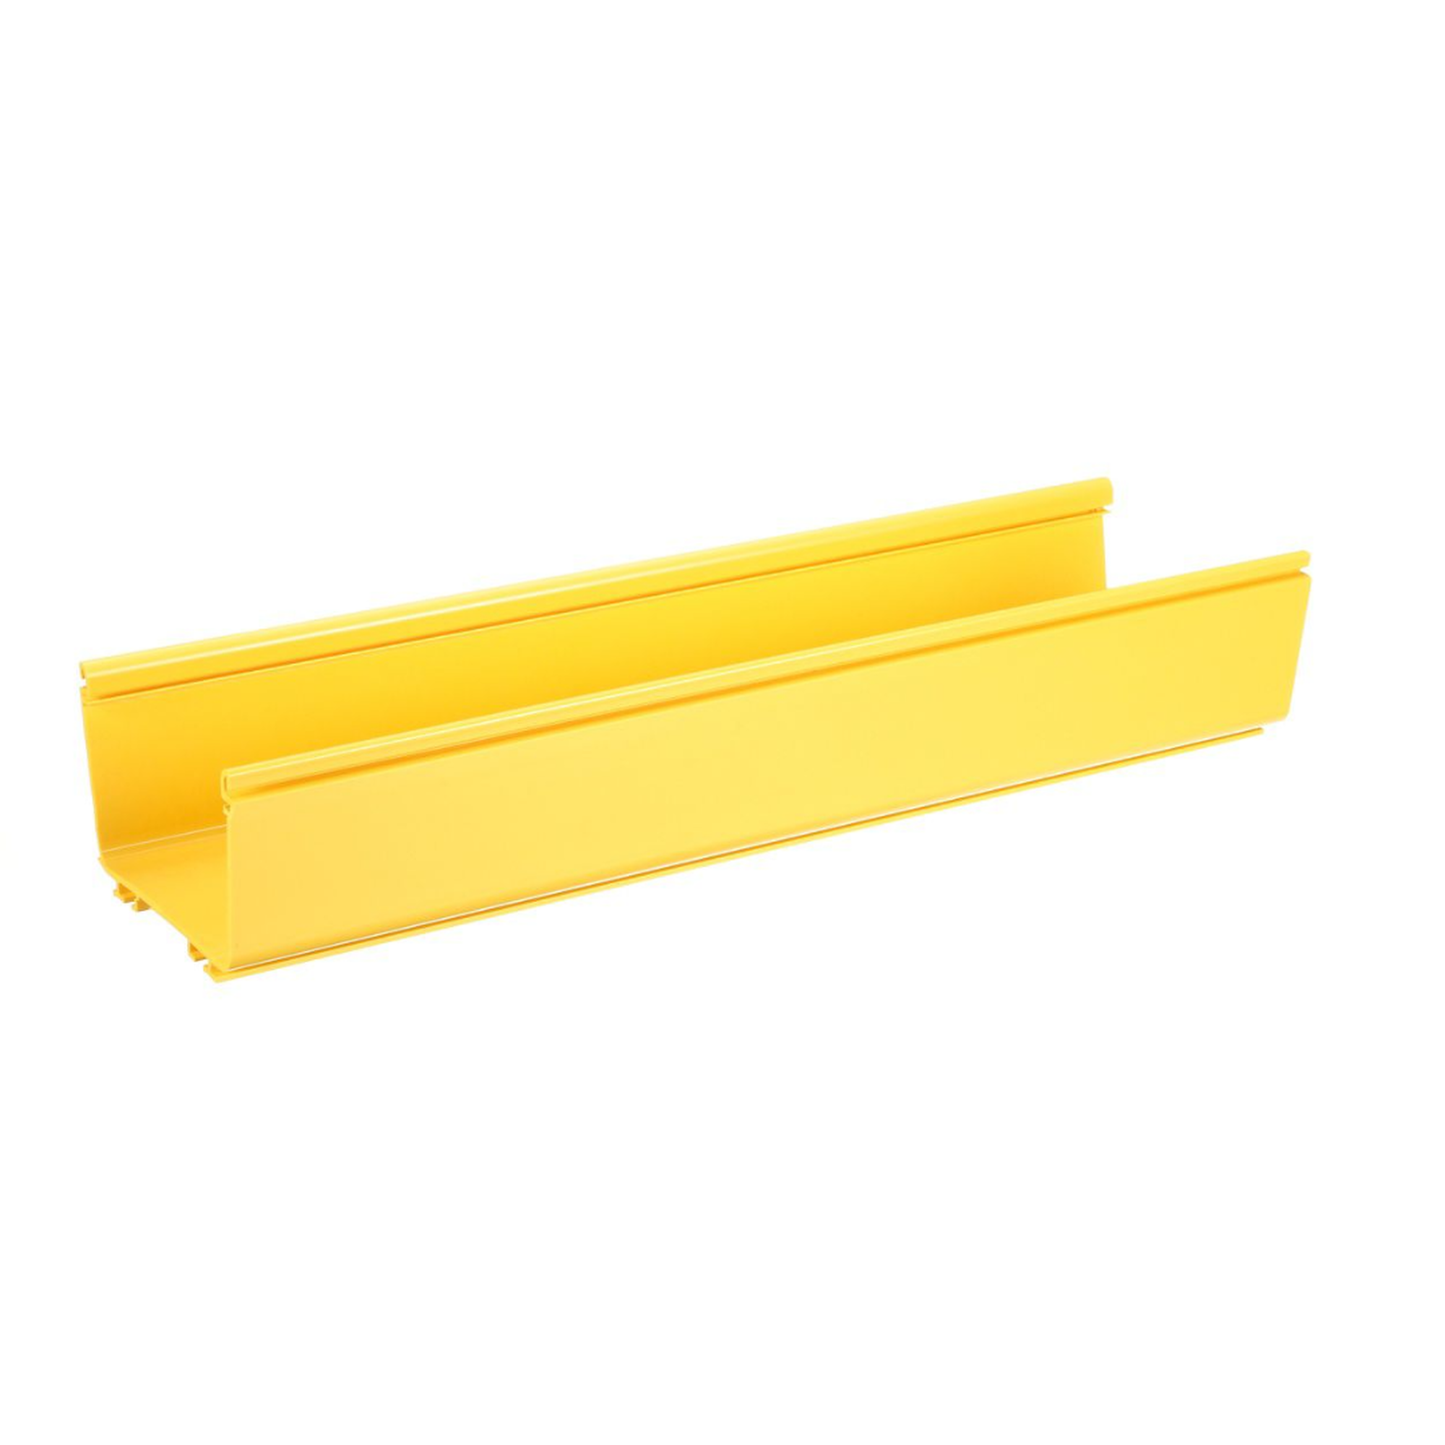 Canaleta FiberRunner™ 6X4, de PVC Rígido, Color Amarillo, 1.8 m de Largo